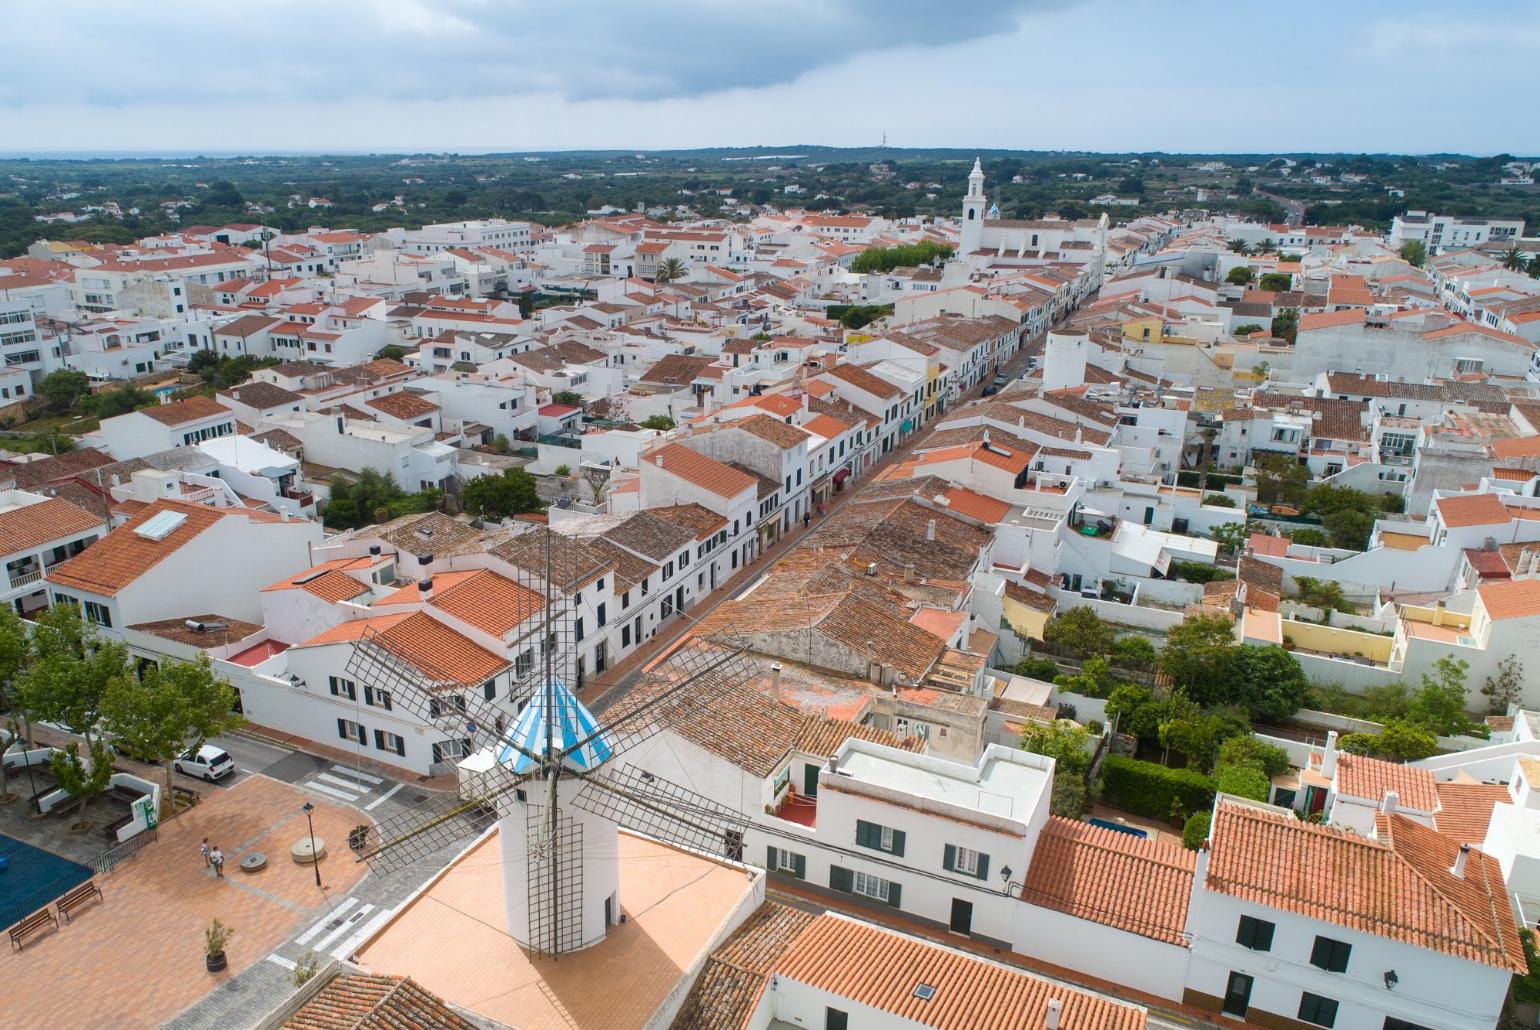 The town of Sant Lluis